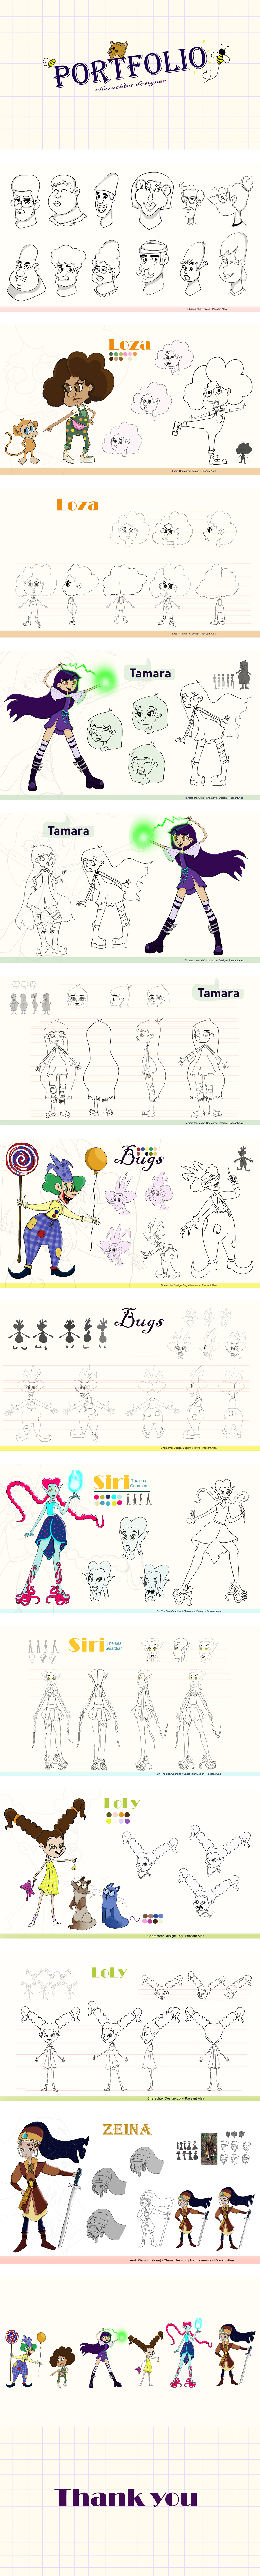 charachter design clown Witches children photoshop cartoon charachters shapes design